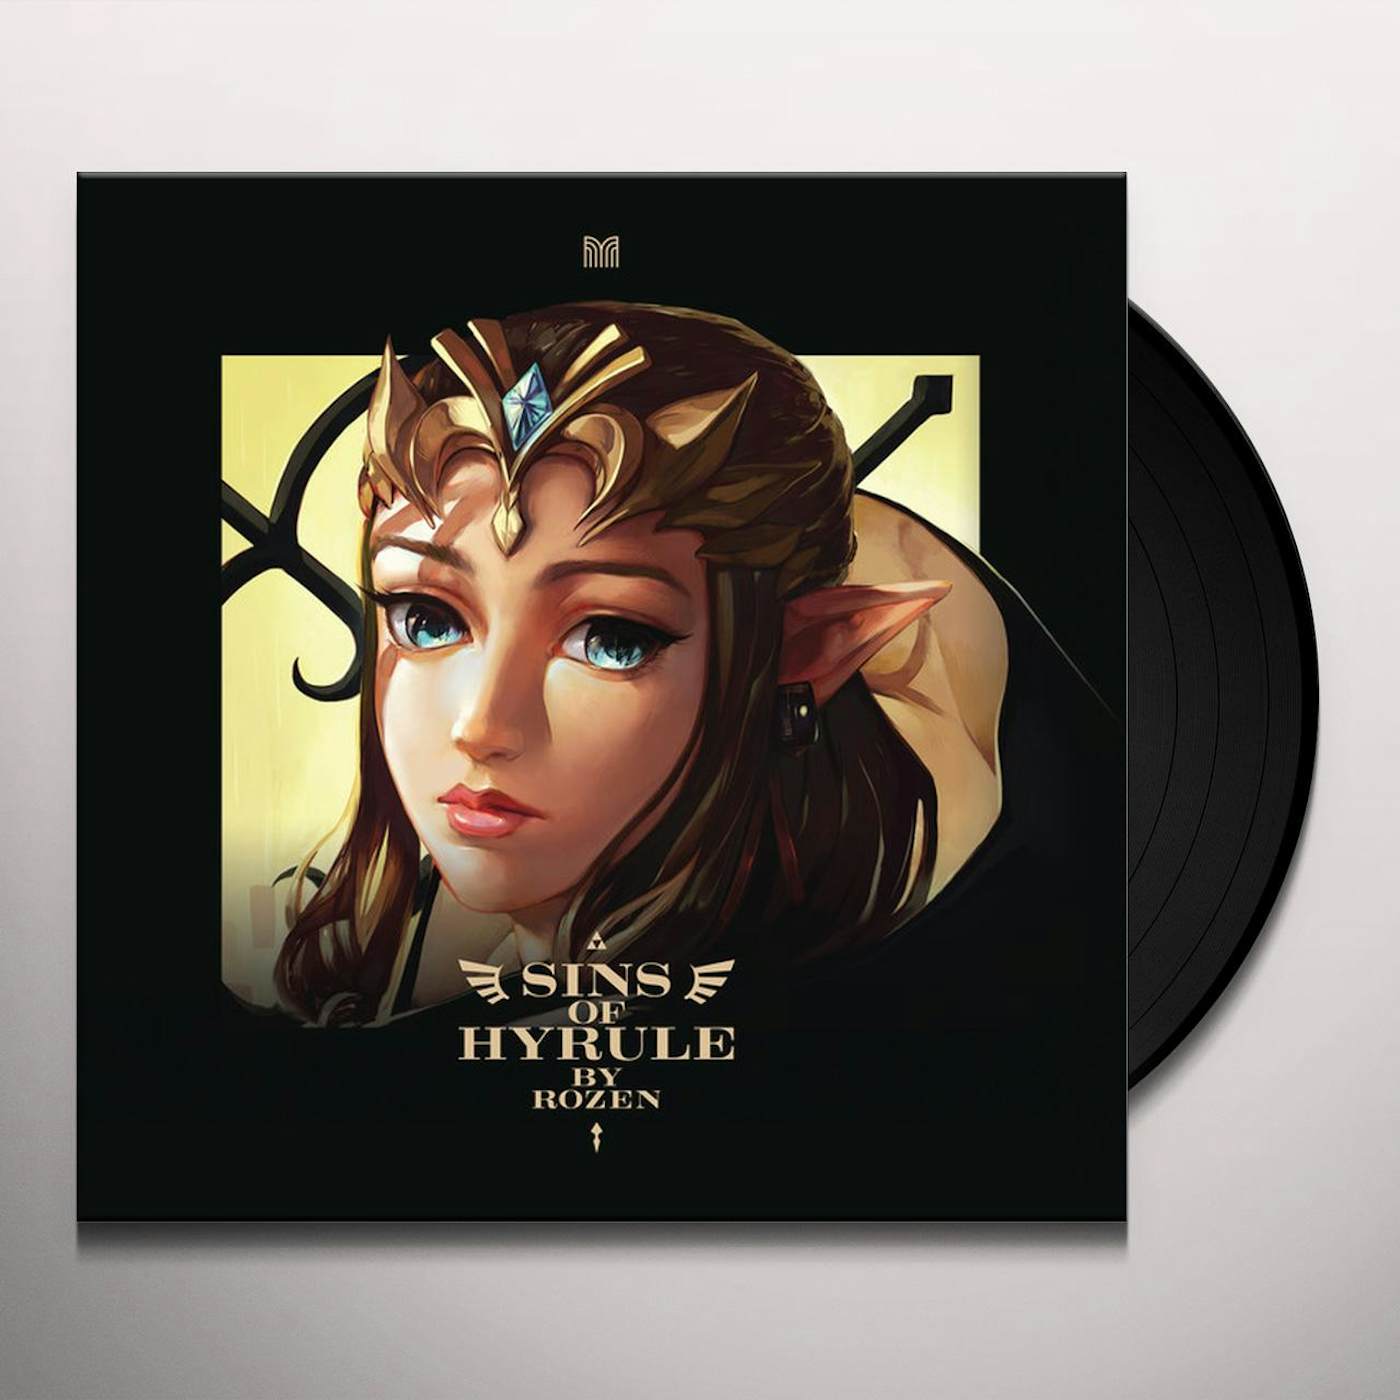 ROZEN Sins of Hyrule Vinyl Record